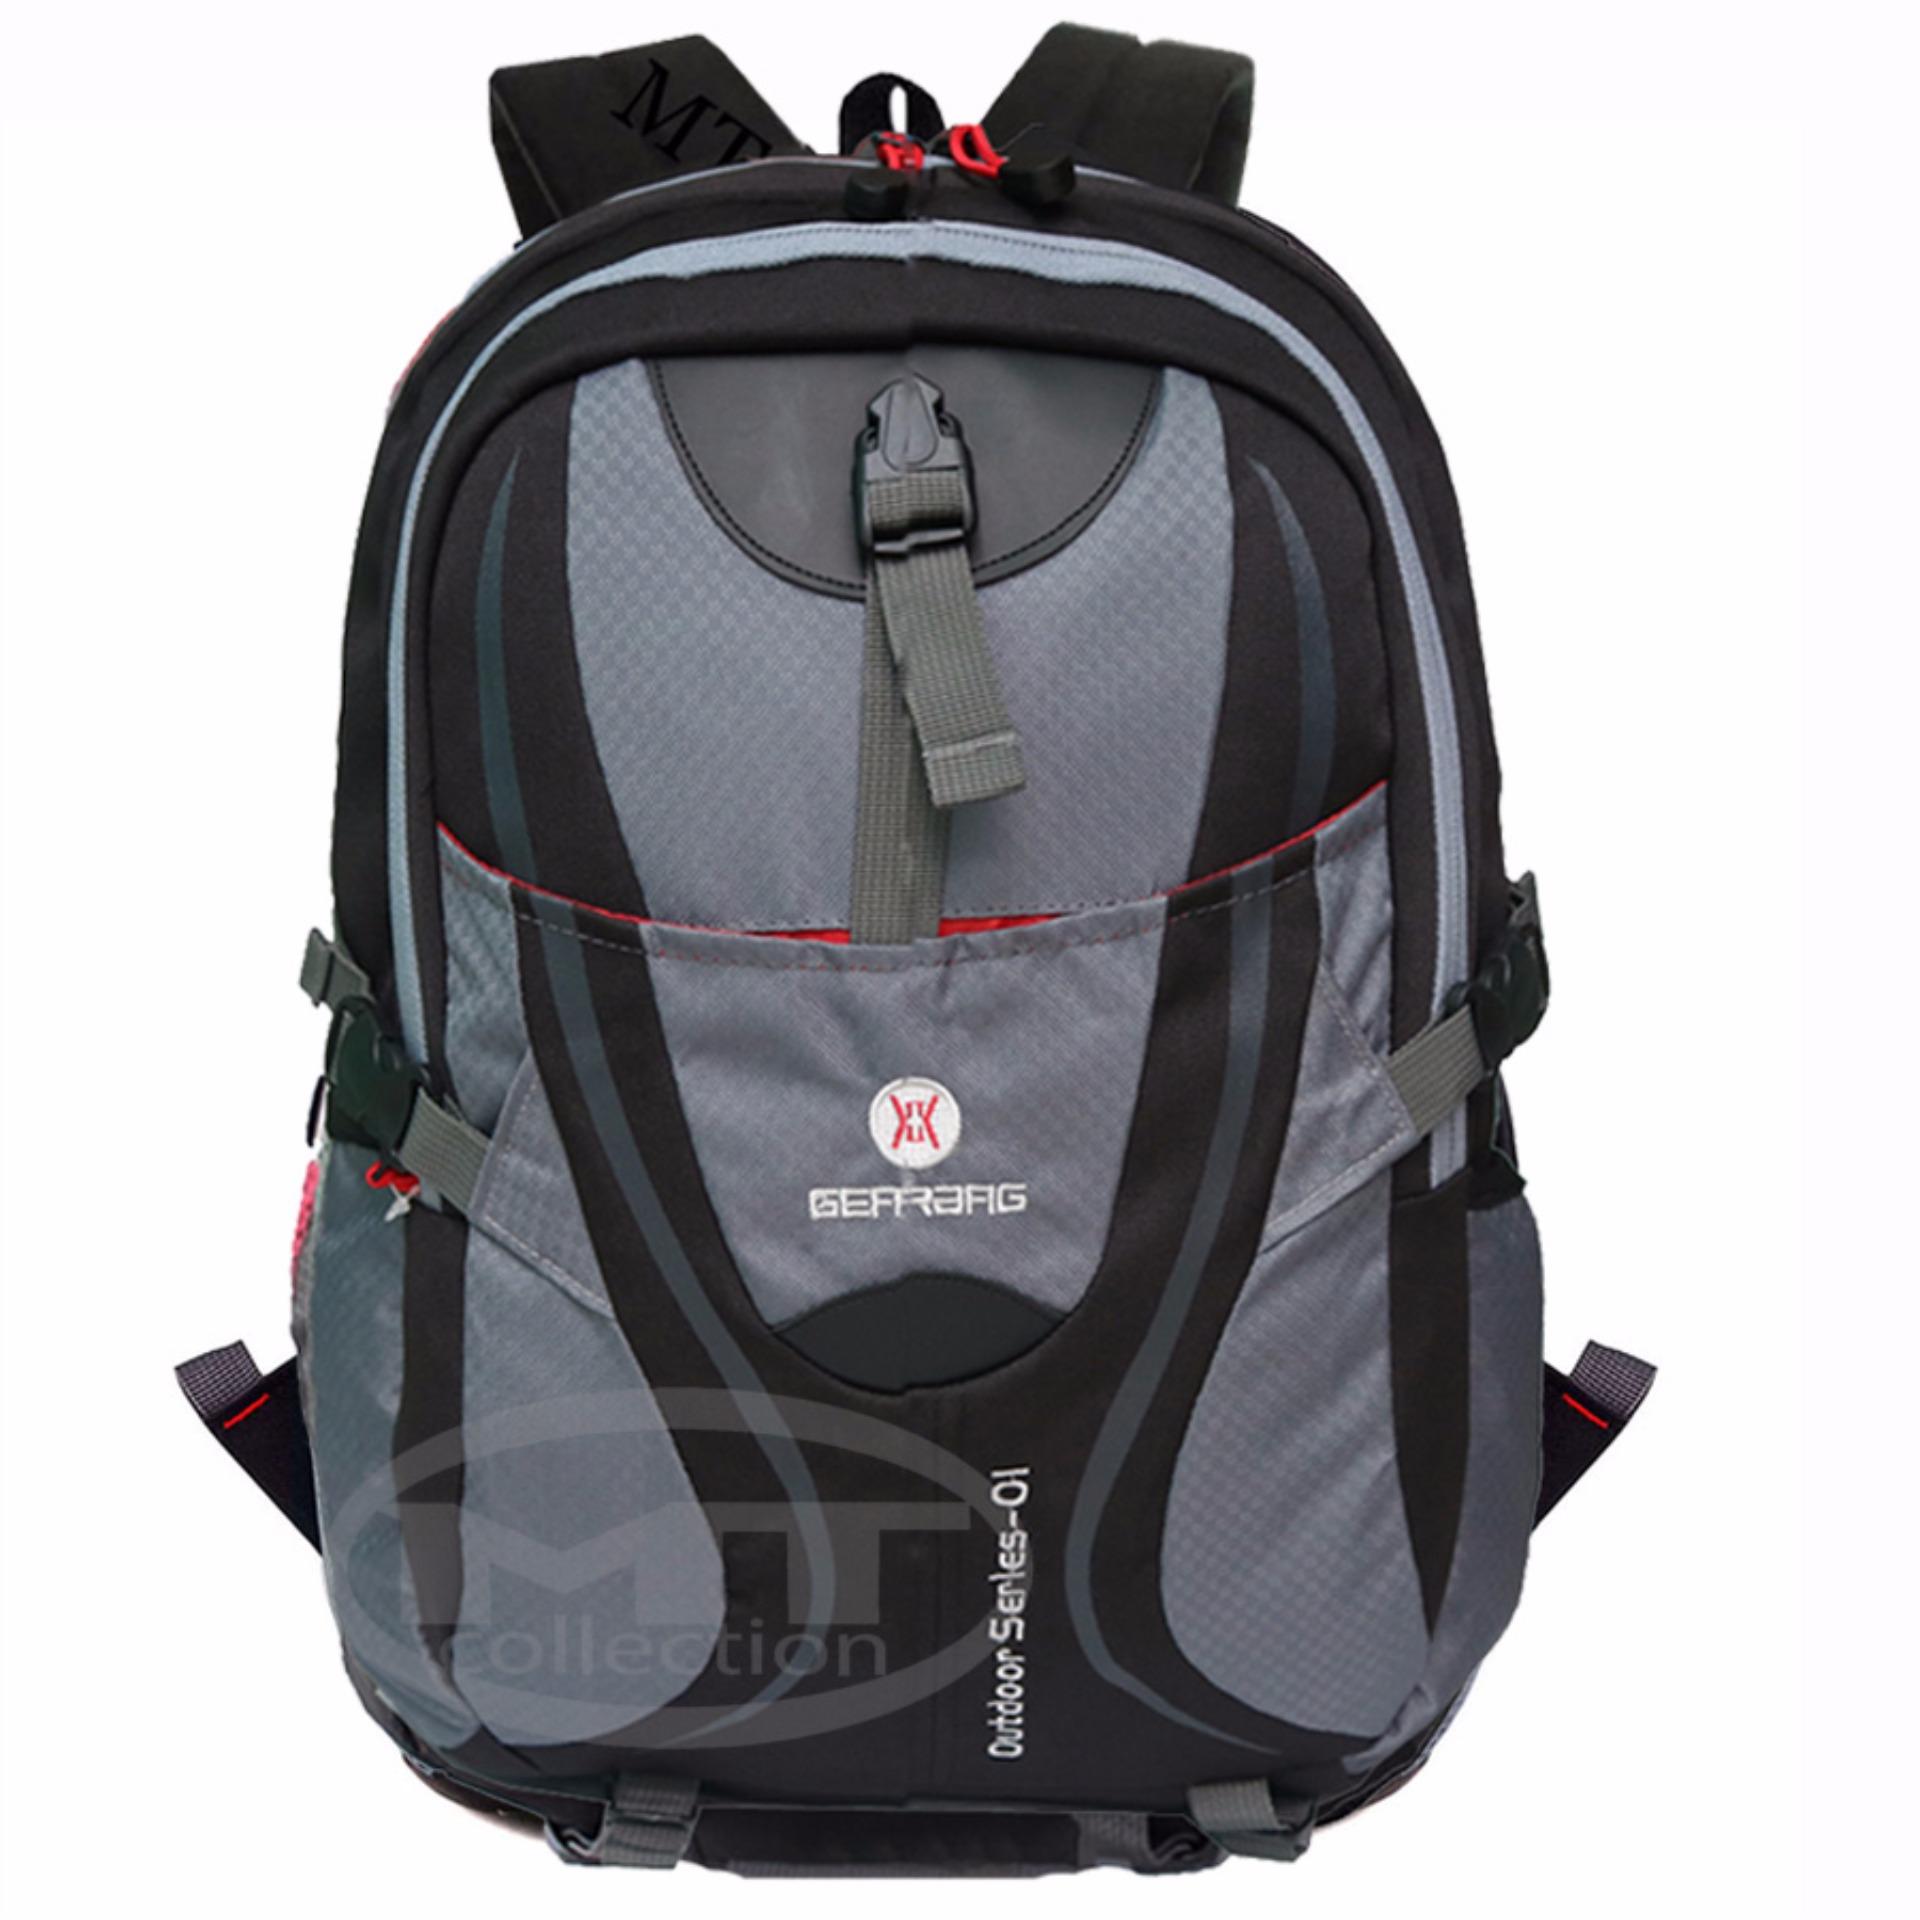 Gear Bag Outdor Series-01 - Tas Ransel Backpack Original Free Raincover